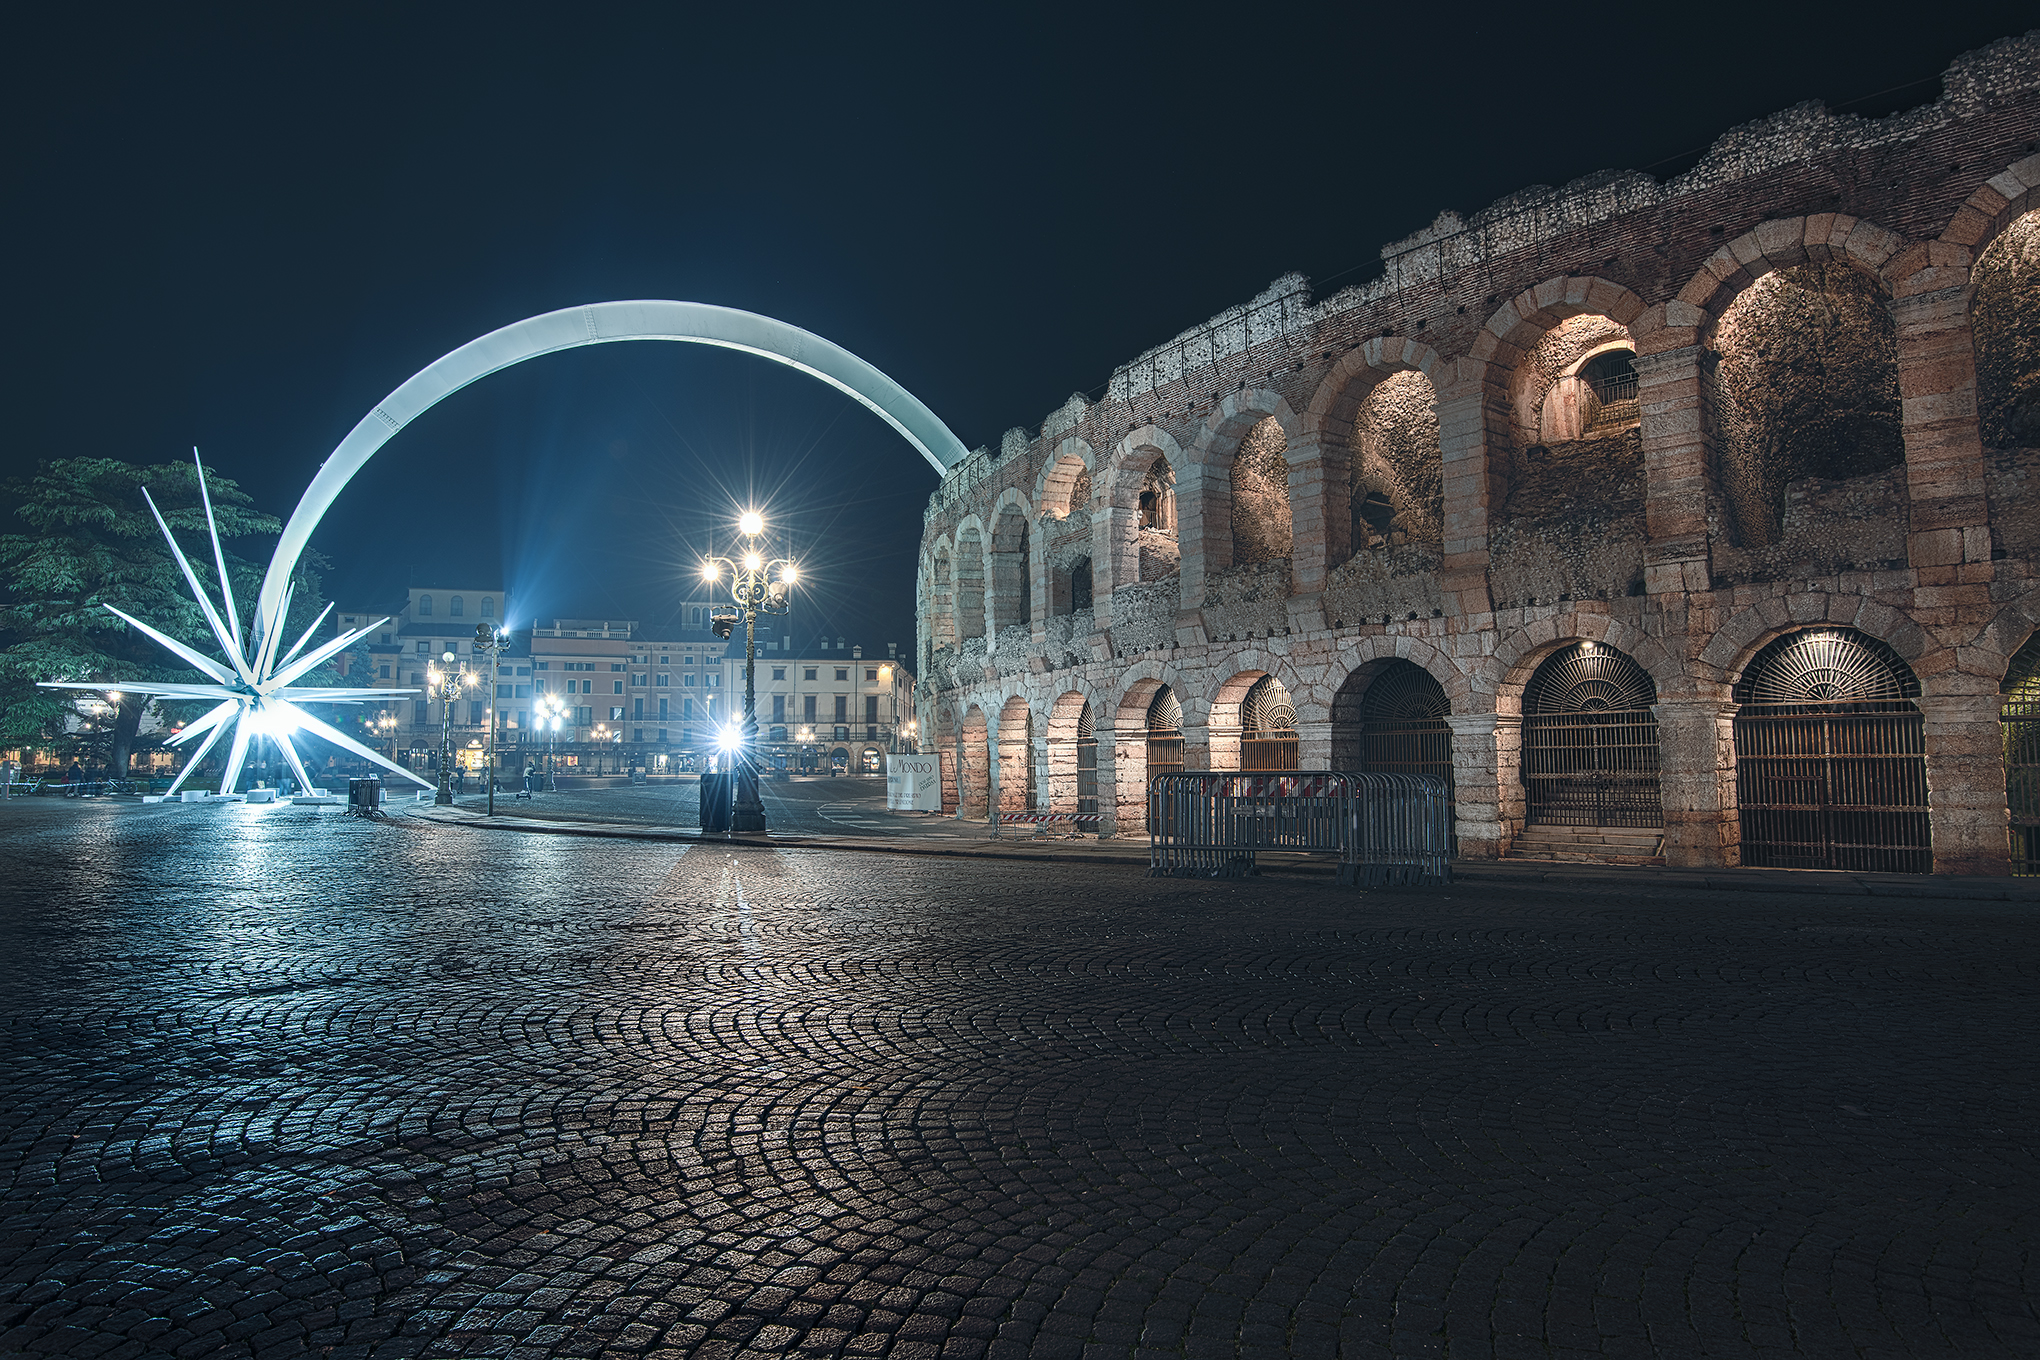 Verona by night...